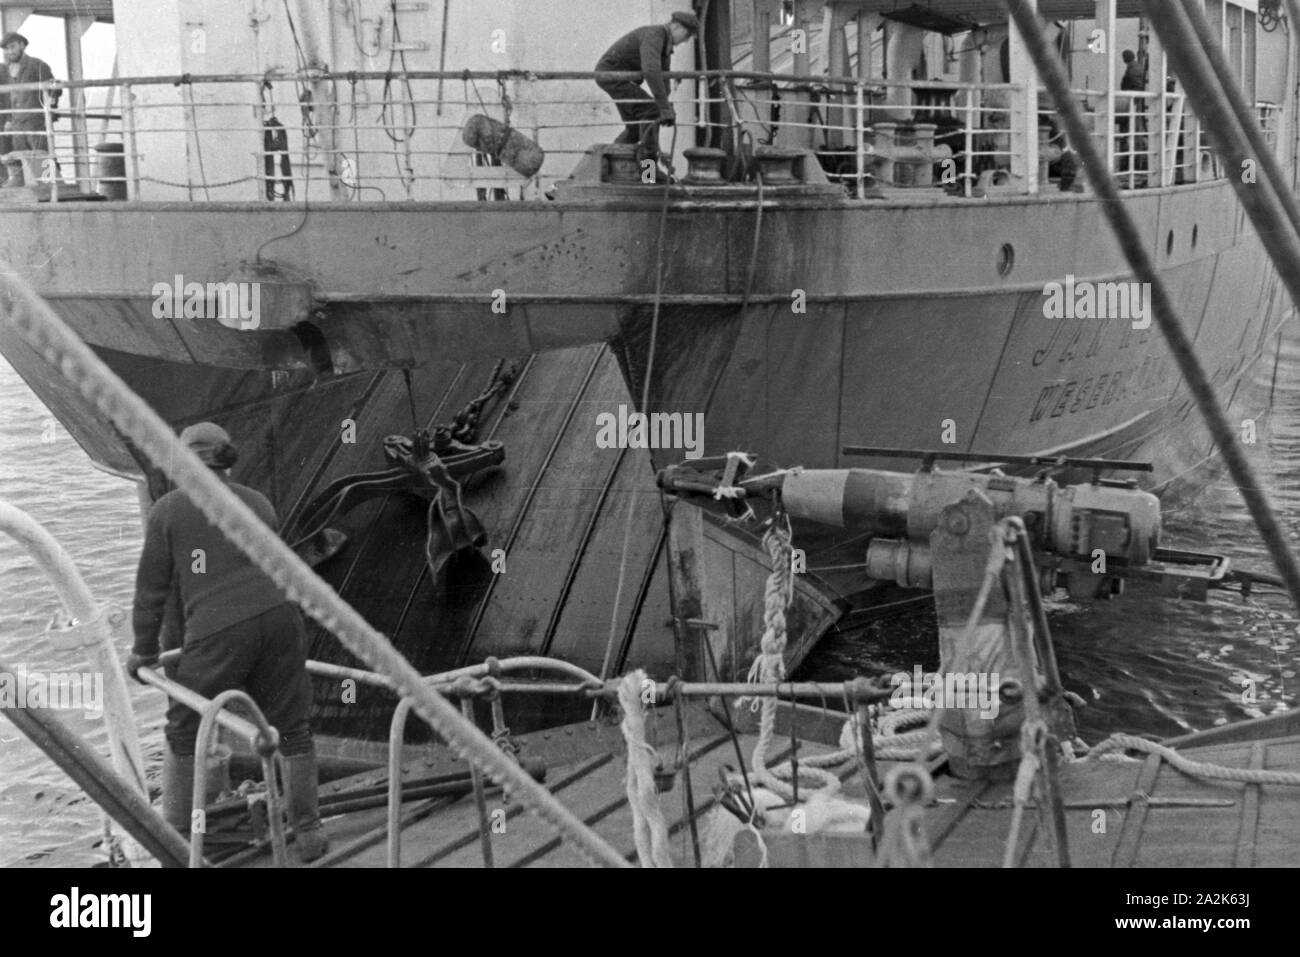 Ein Fangboot am Heck des Fabrikschiffs "Jan Wellem", 1930er Jahre. Ein Walfang Boot am Heck des Fabrikschiffs "Jan Wellem", 1930er Jahre. Stockfoto